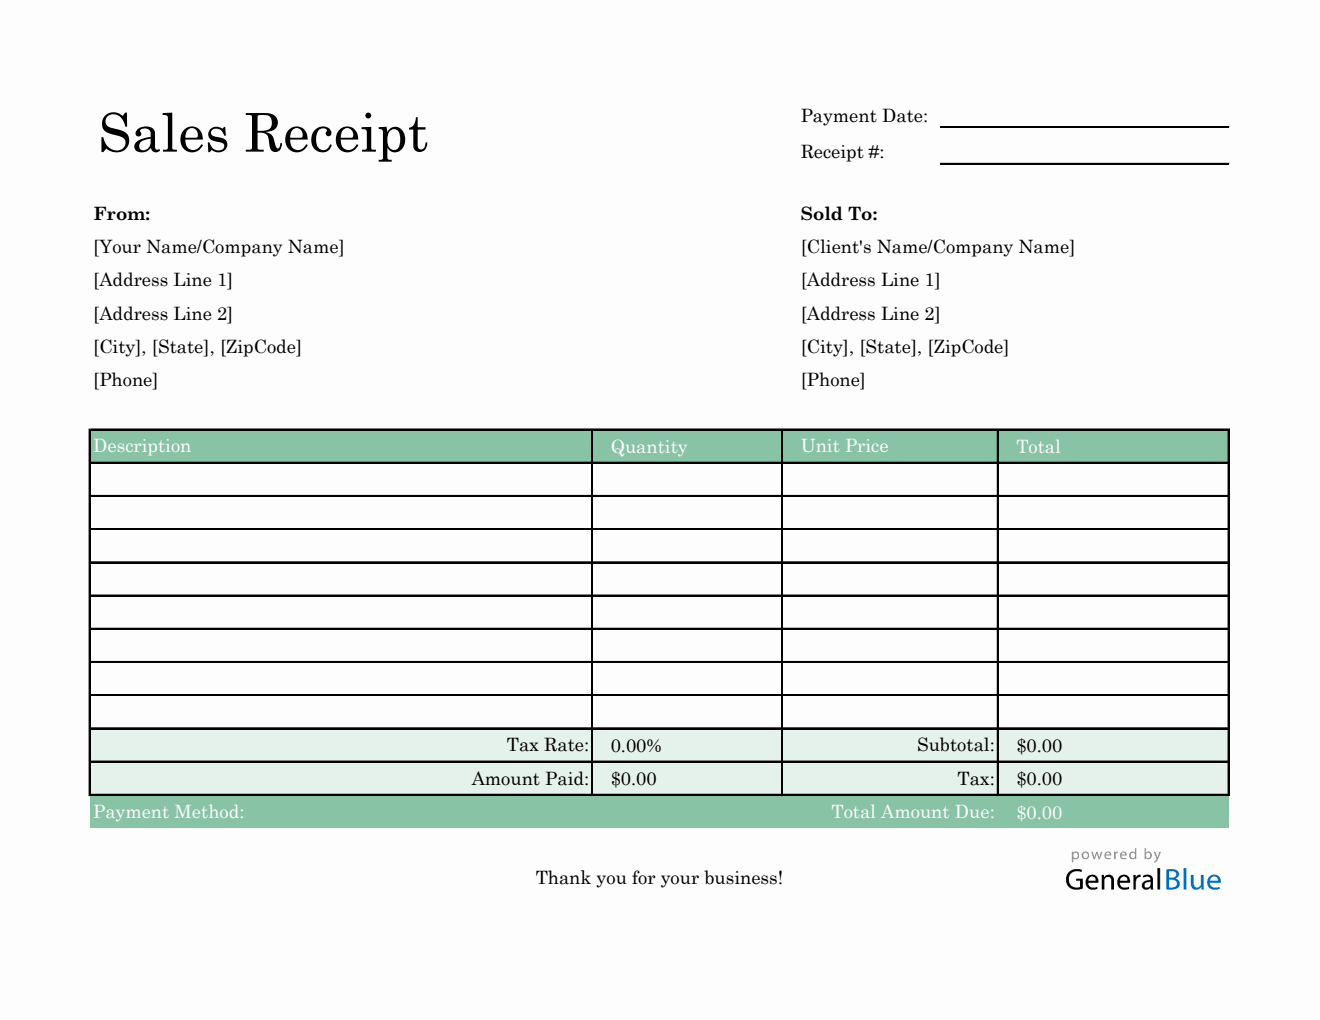 Sales Receipt Template in Excel (Green)